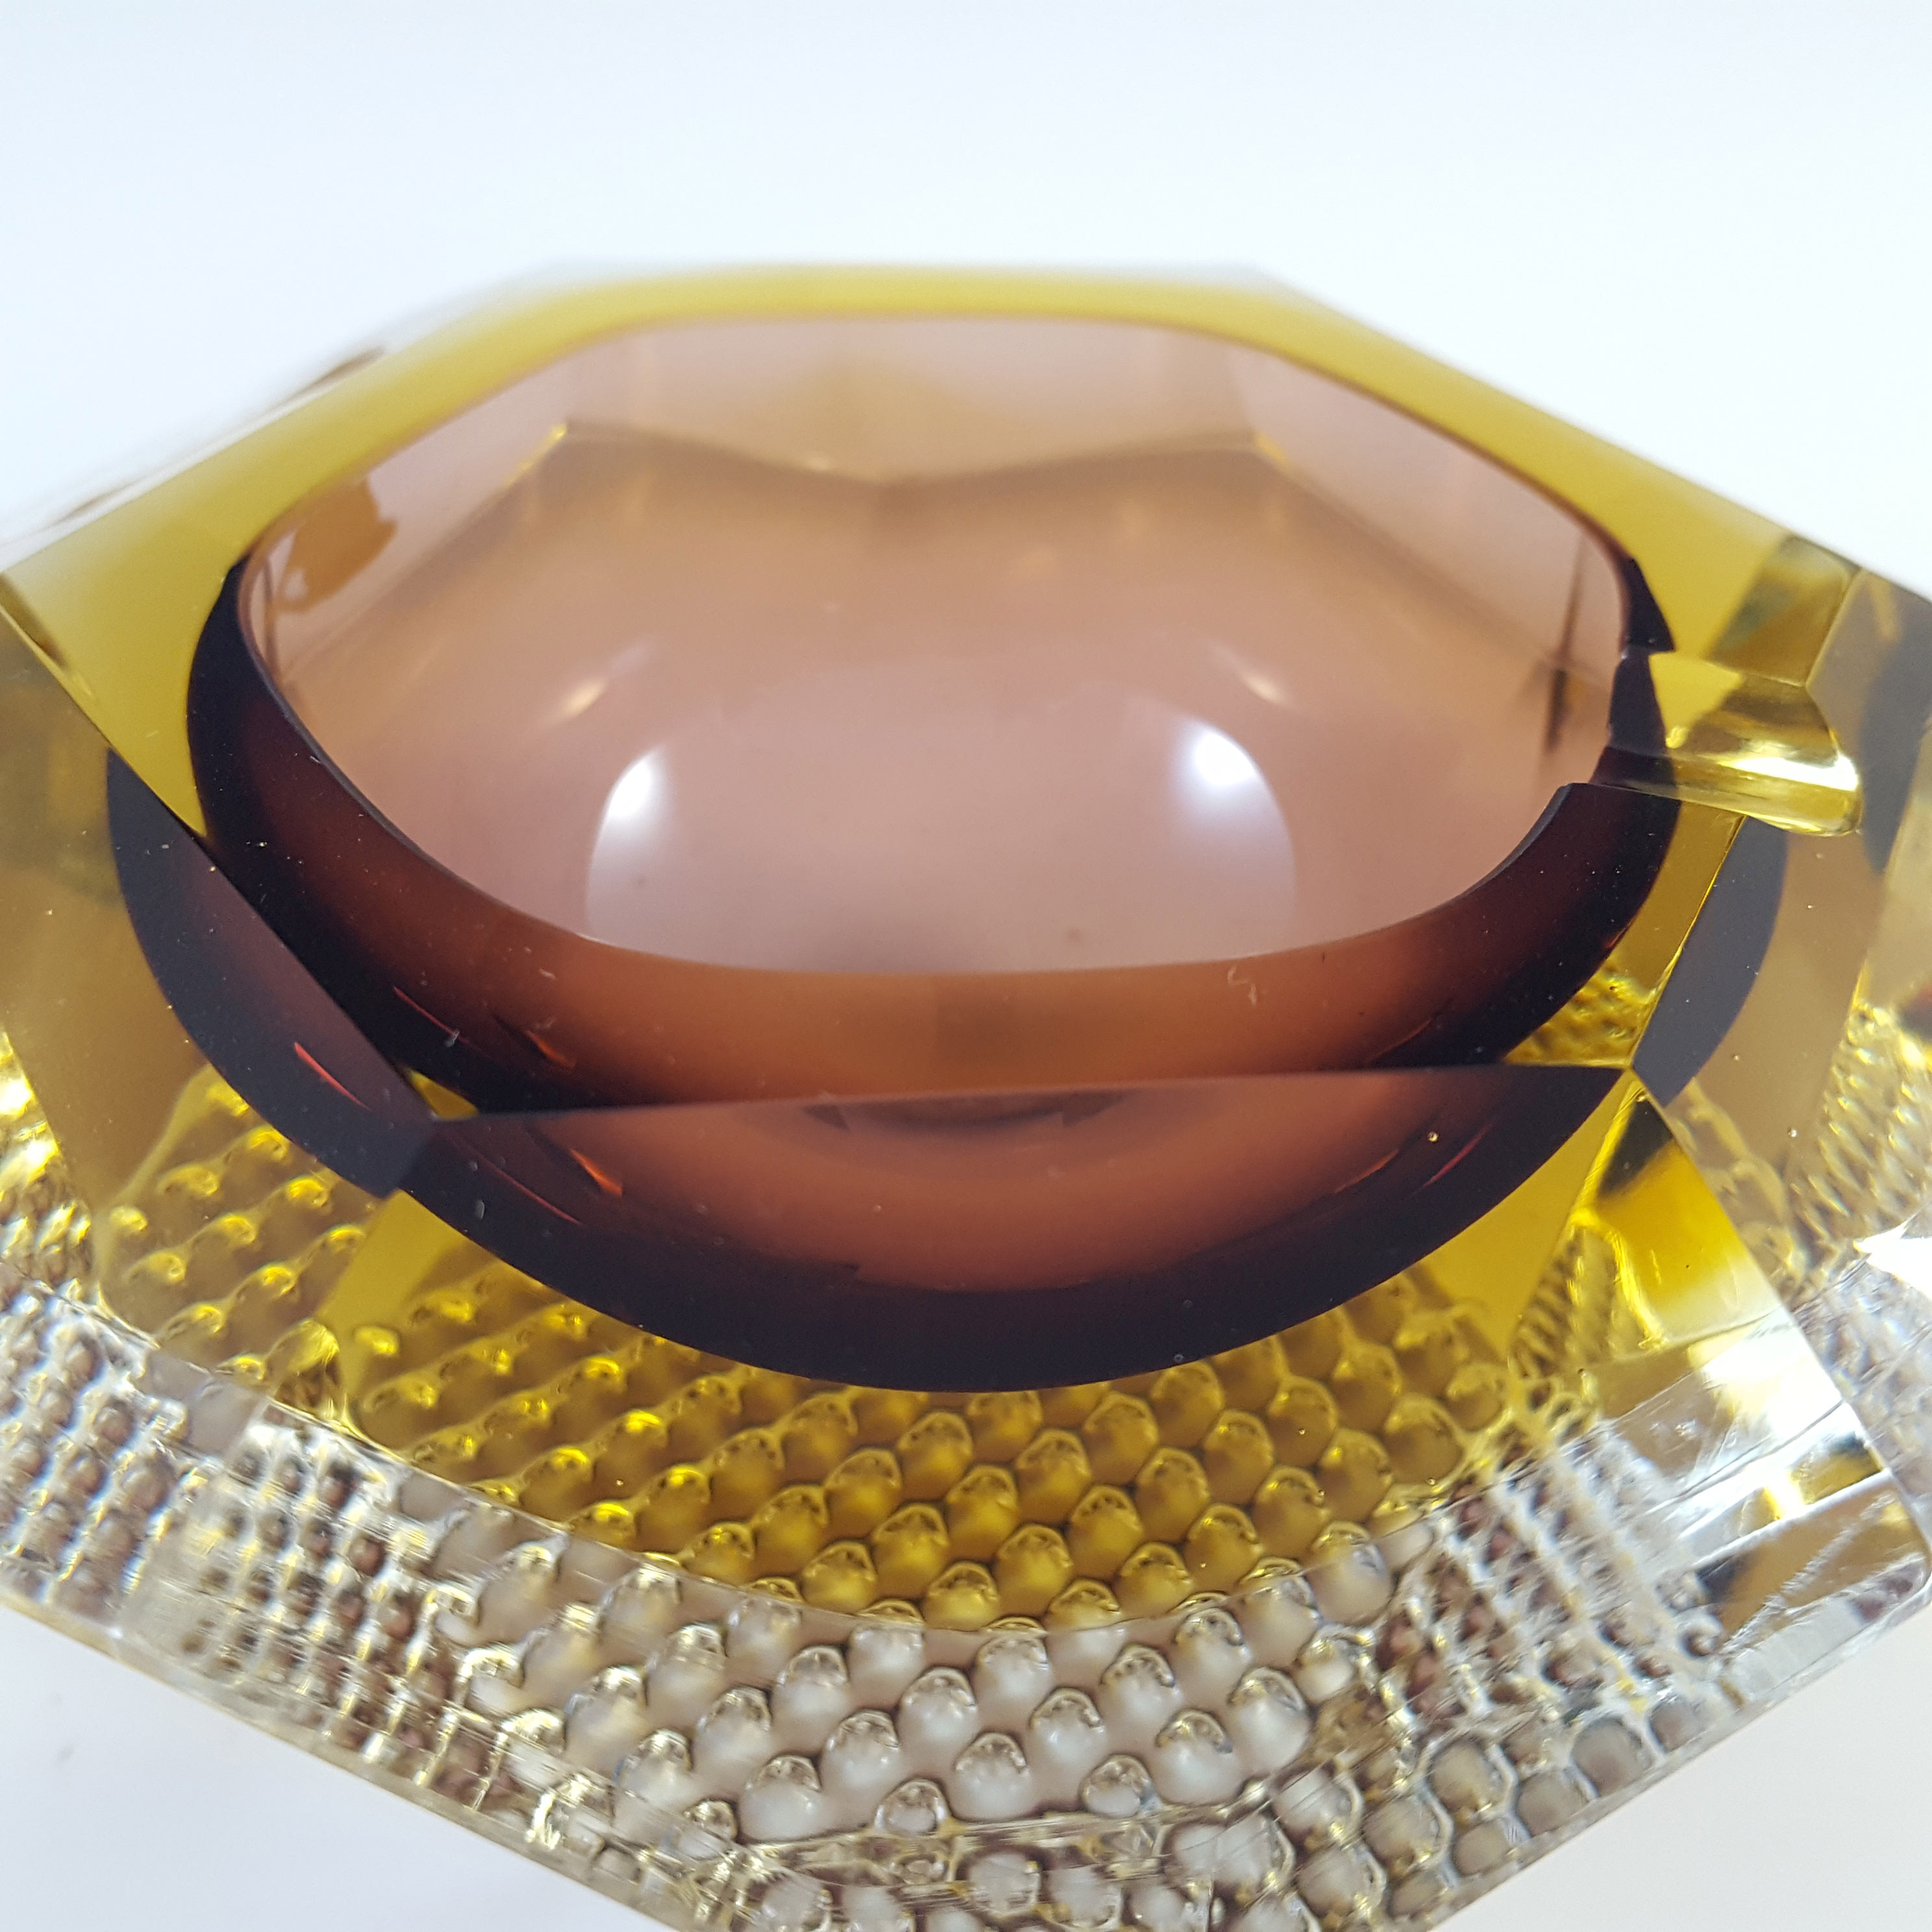 Mandruzzato Murano Faceted Brown & Amber Sommerso Glass Bowl - Click Image to Close